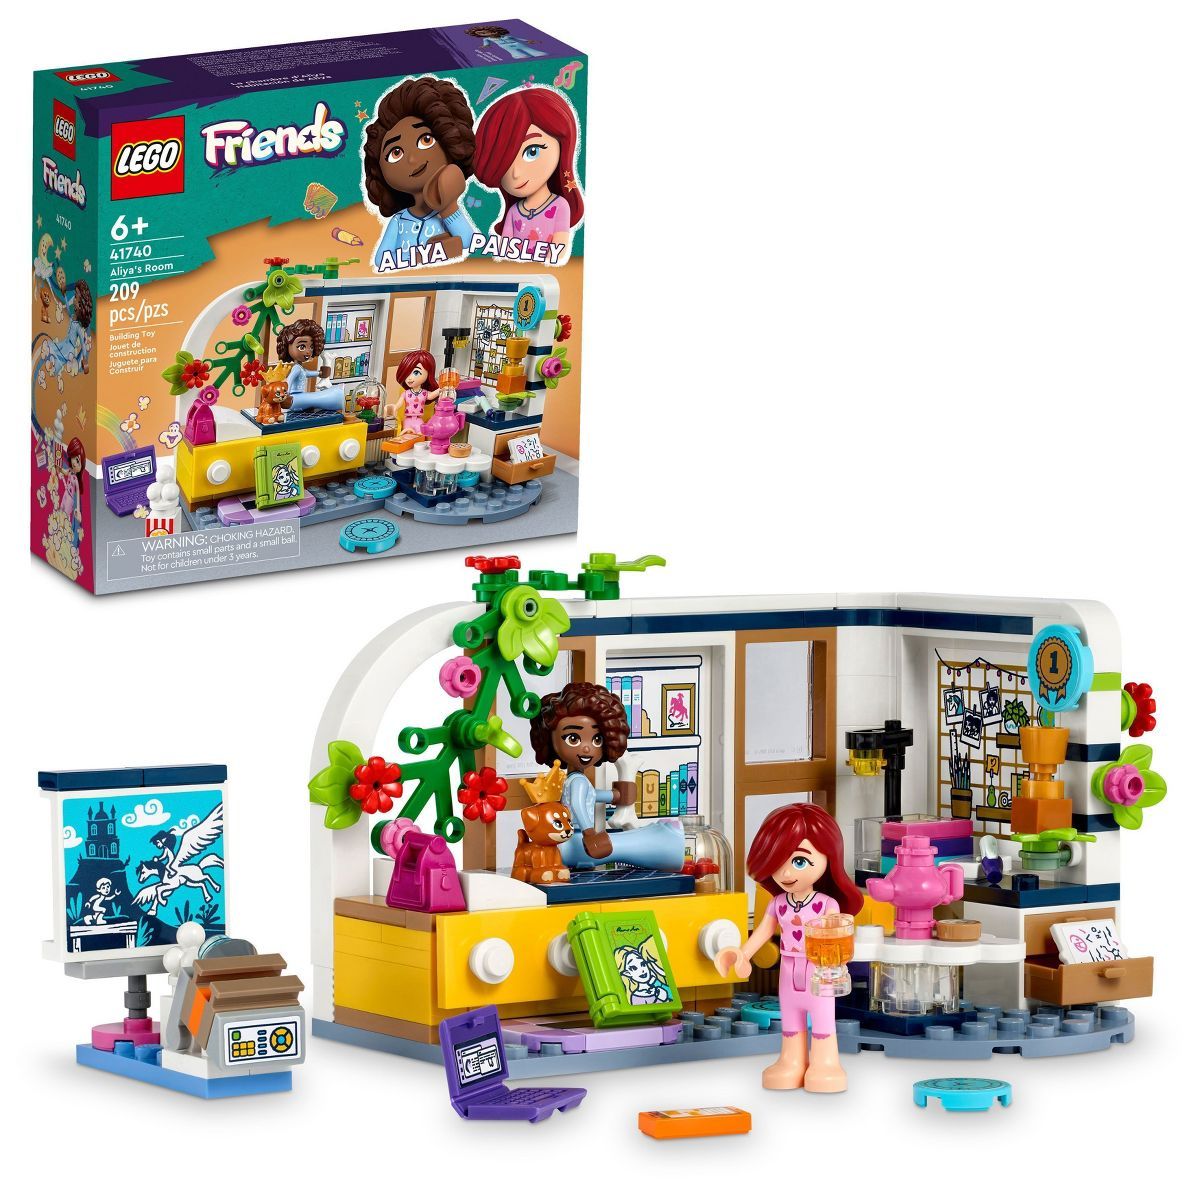 LEGO Friends Aliya's Room Mini-Doll Sleepover Toy 41740 | Target